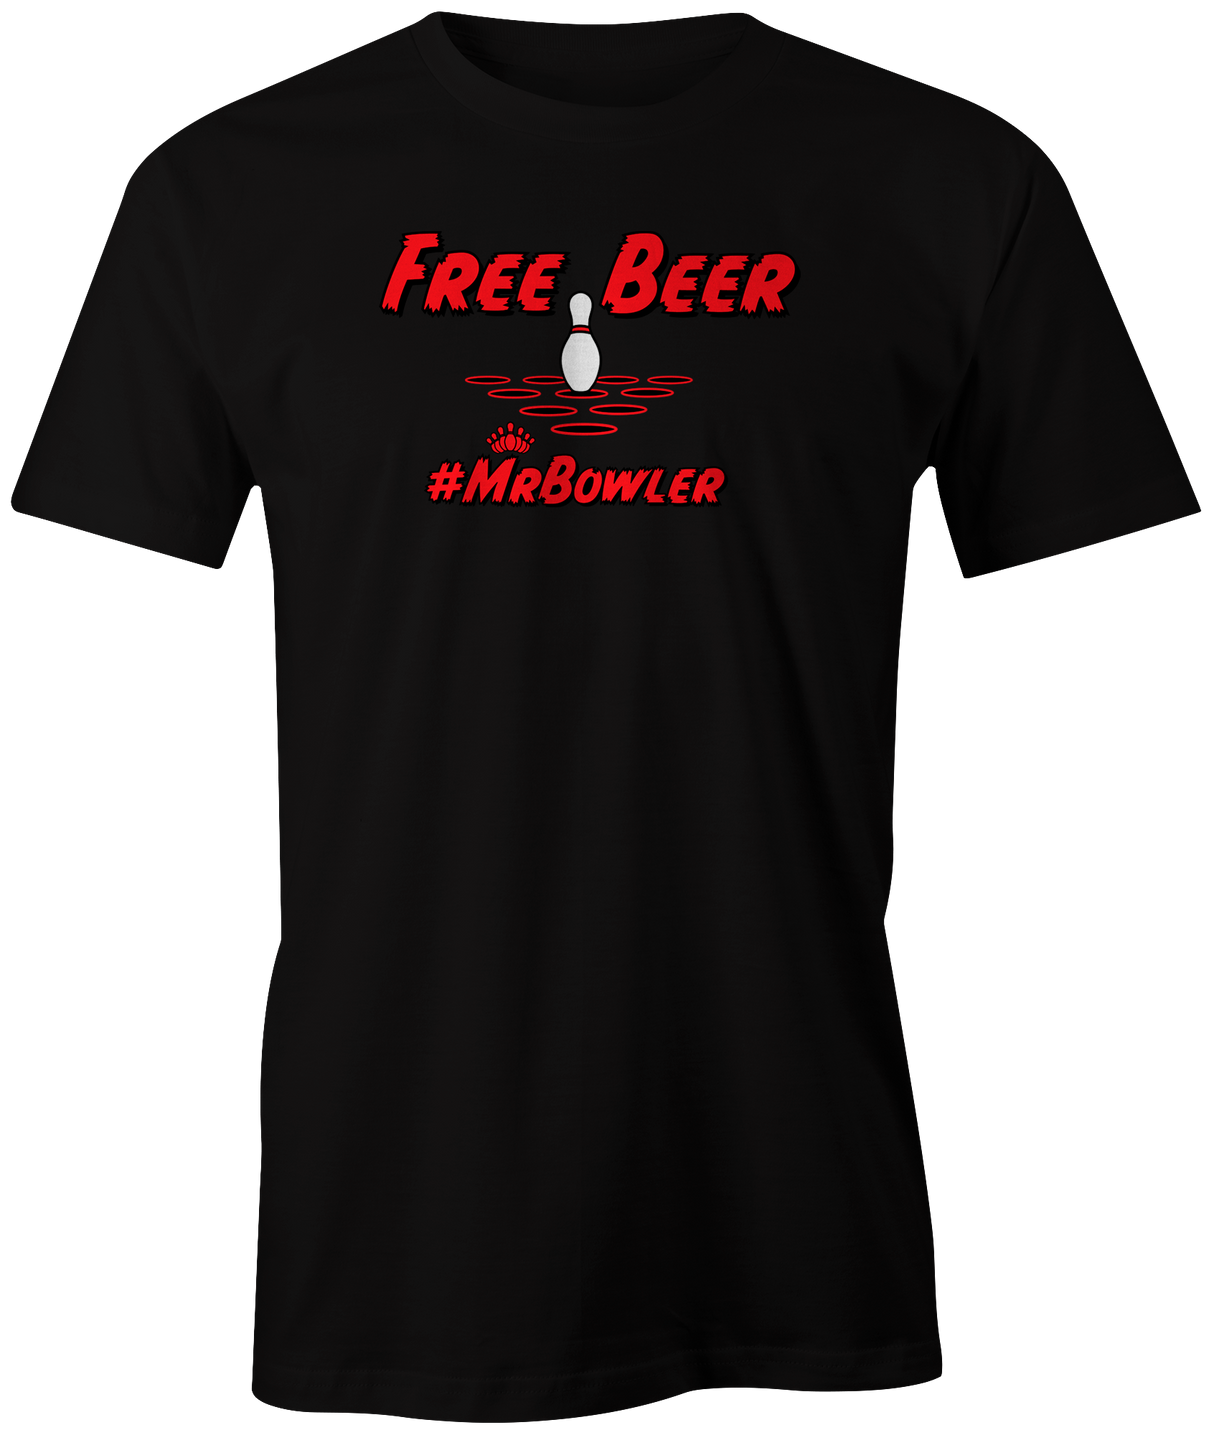 MrBowler | 5 pin = Free Beer